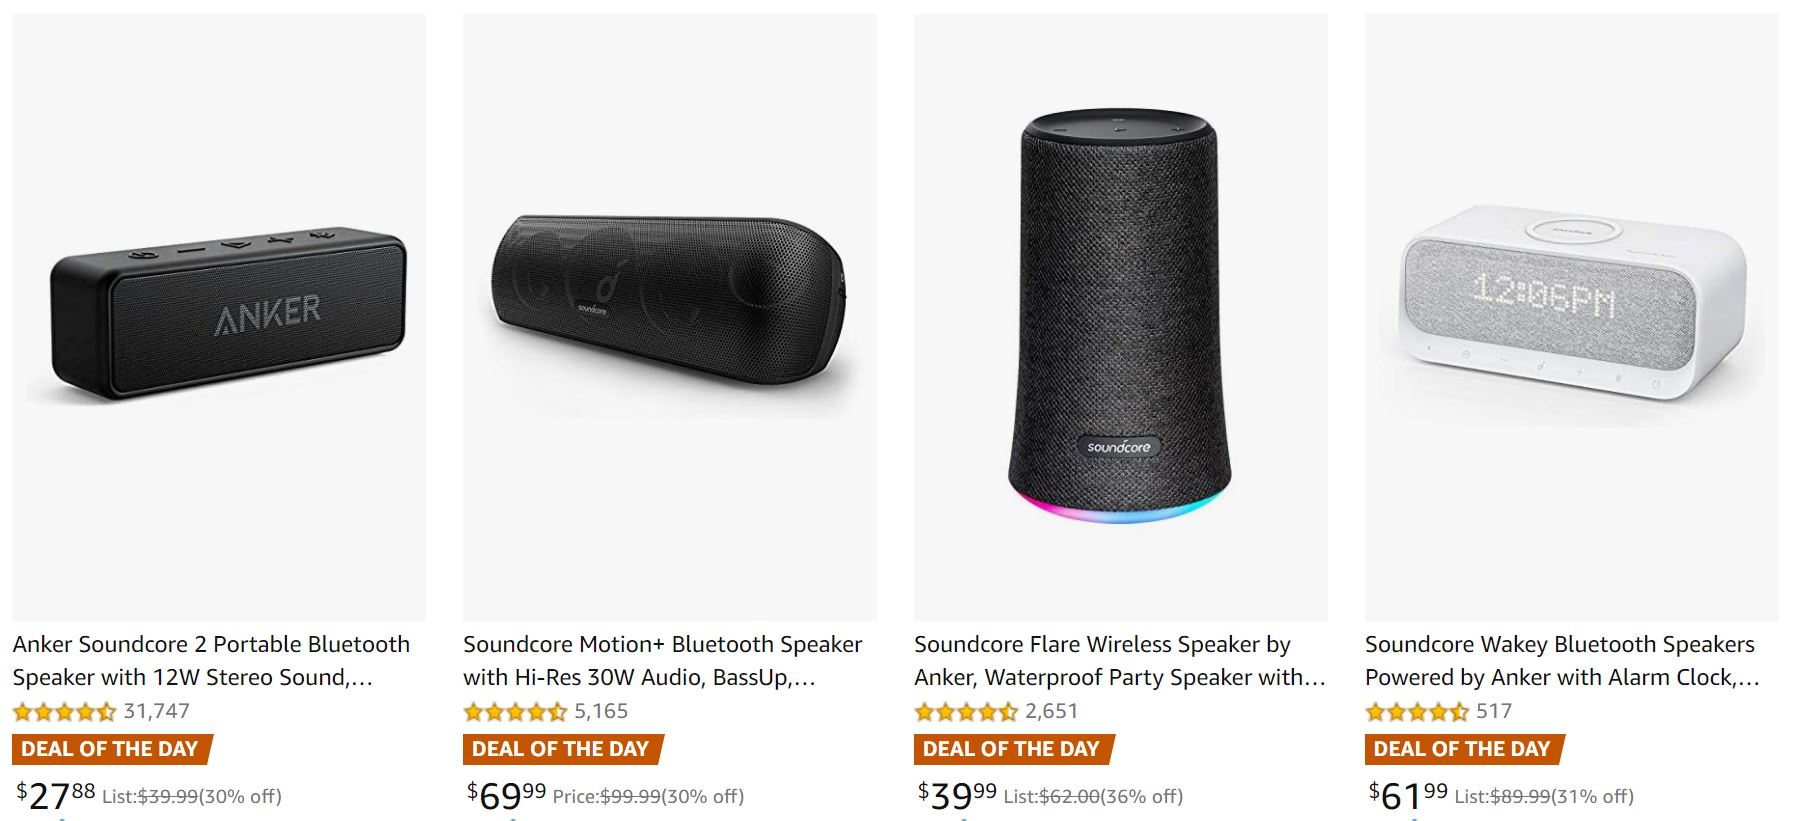 Anker Bluetooth speakers Amazon Deals